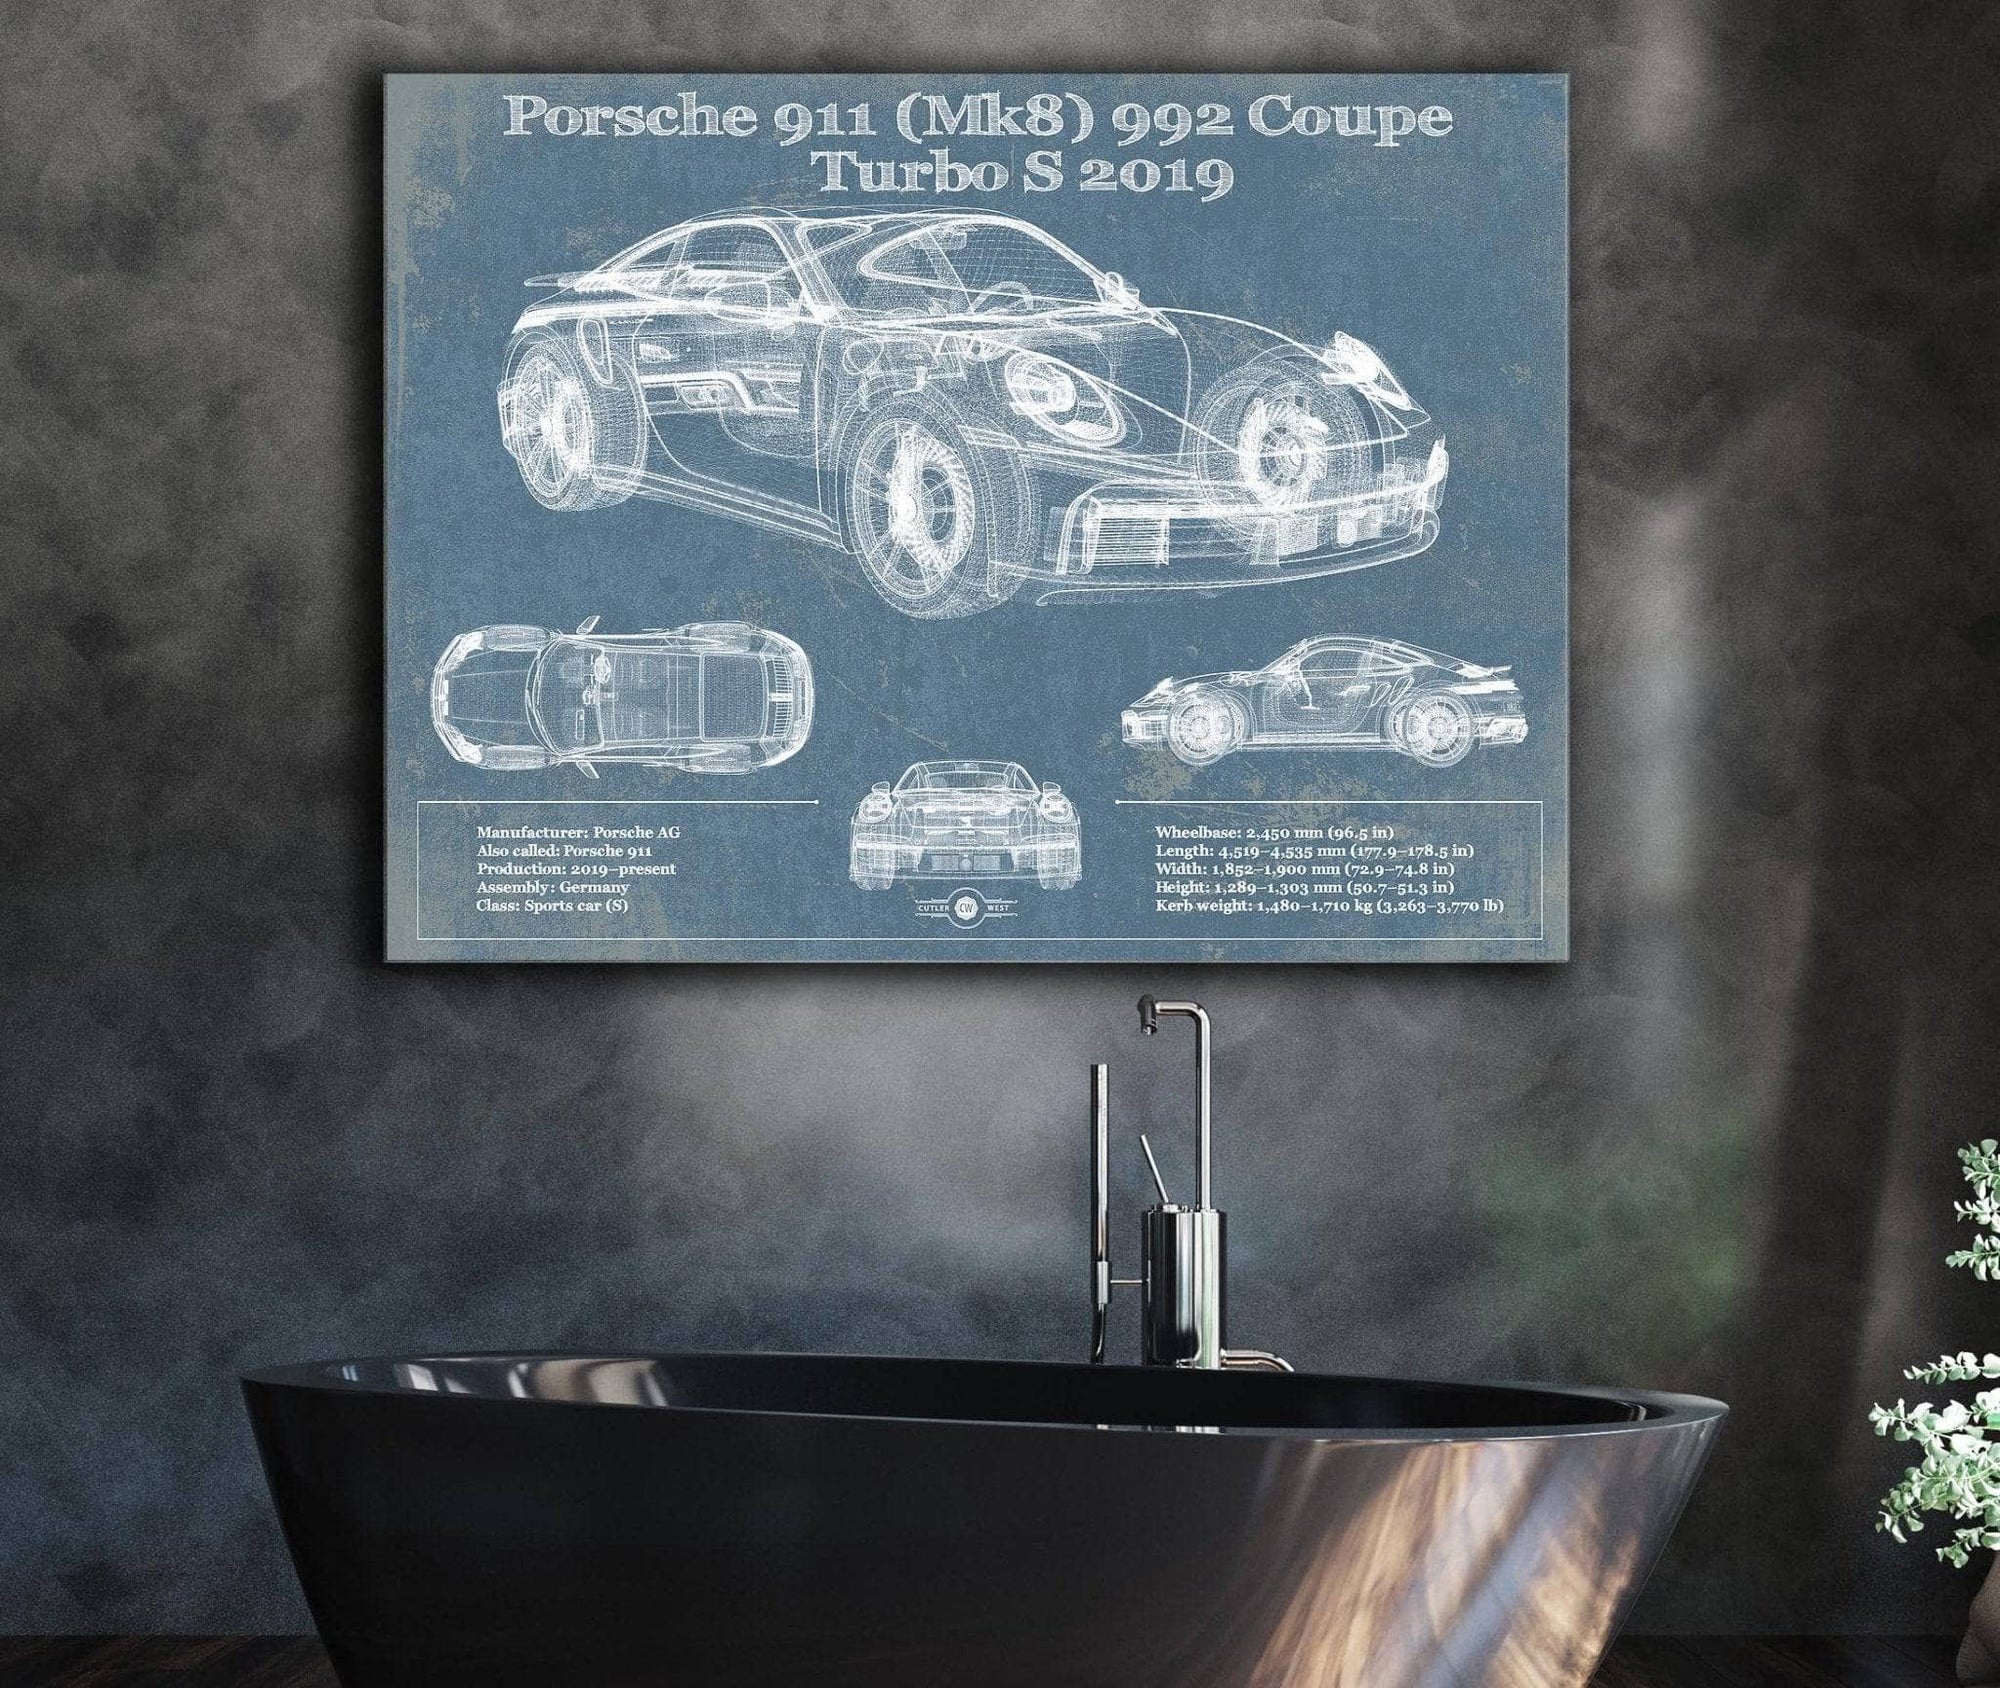 Cutler West Porsche Collection Porsche 911 Mk8 992 Carrera Coupe Turbo S 2019 Vintage Blueprint Auto Print